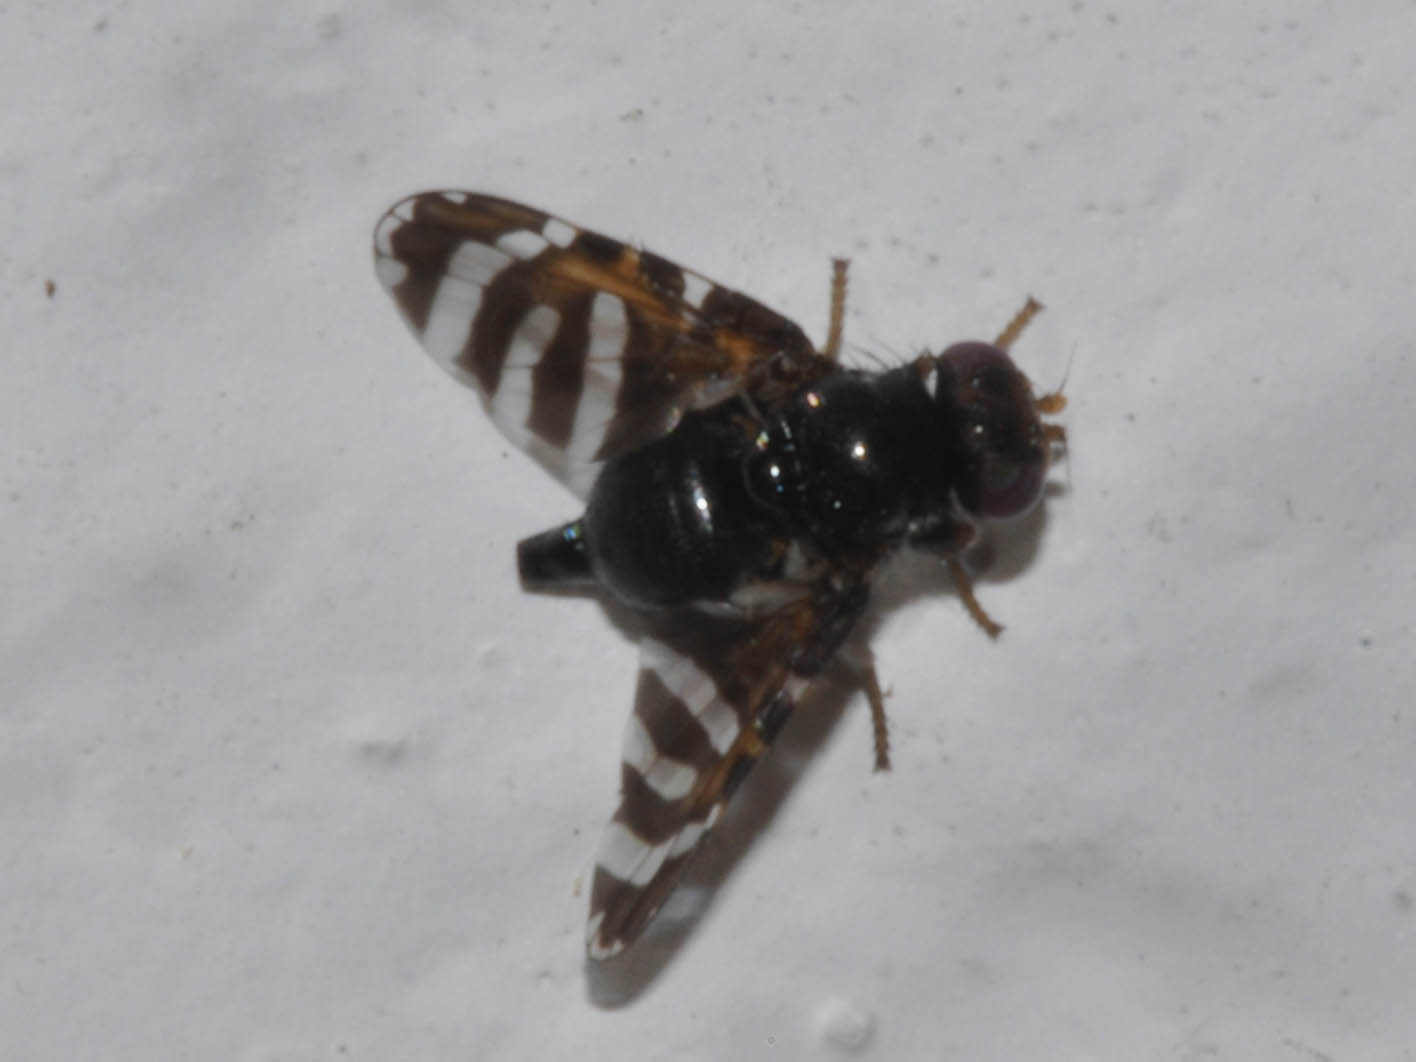 Tephritidae: Oedaspis fissa (female) (1)